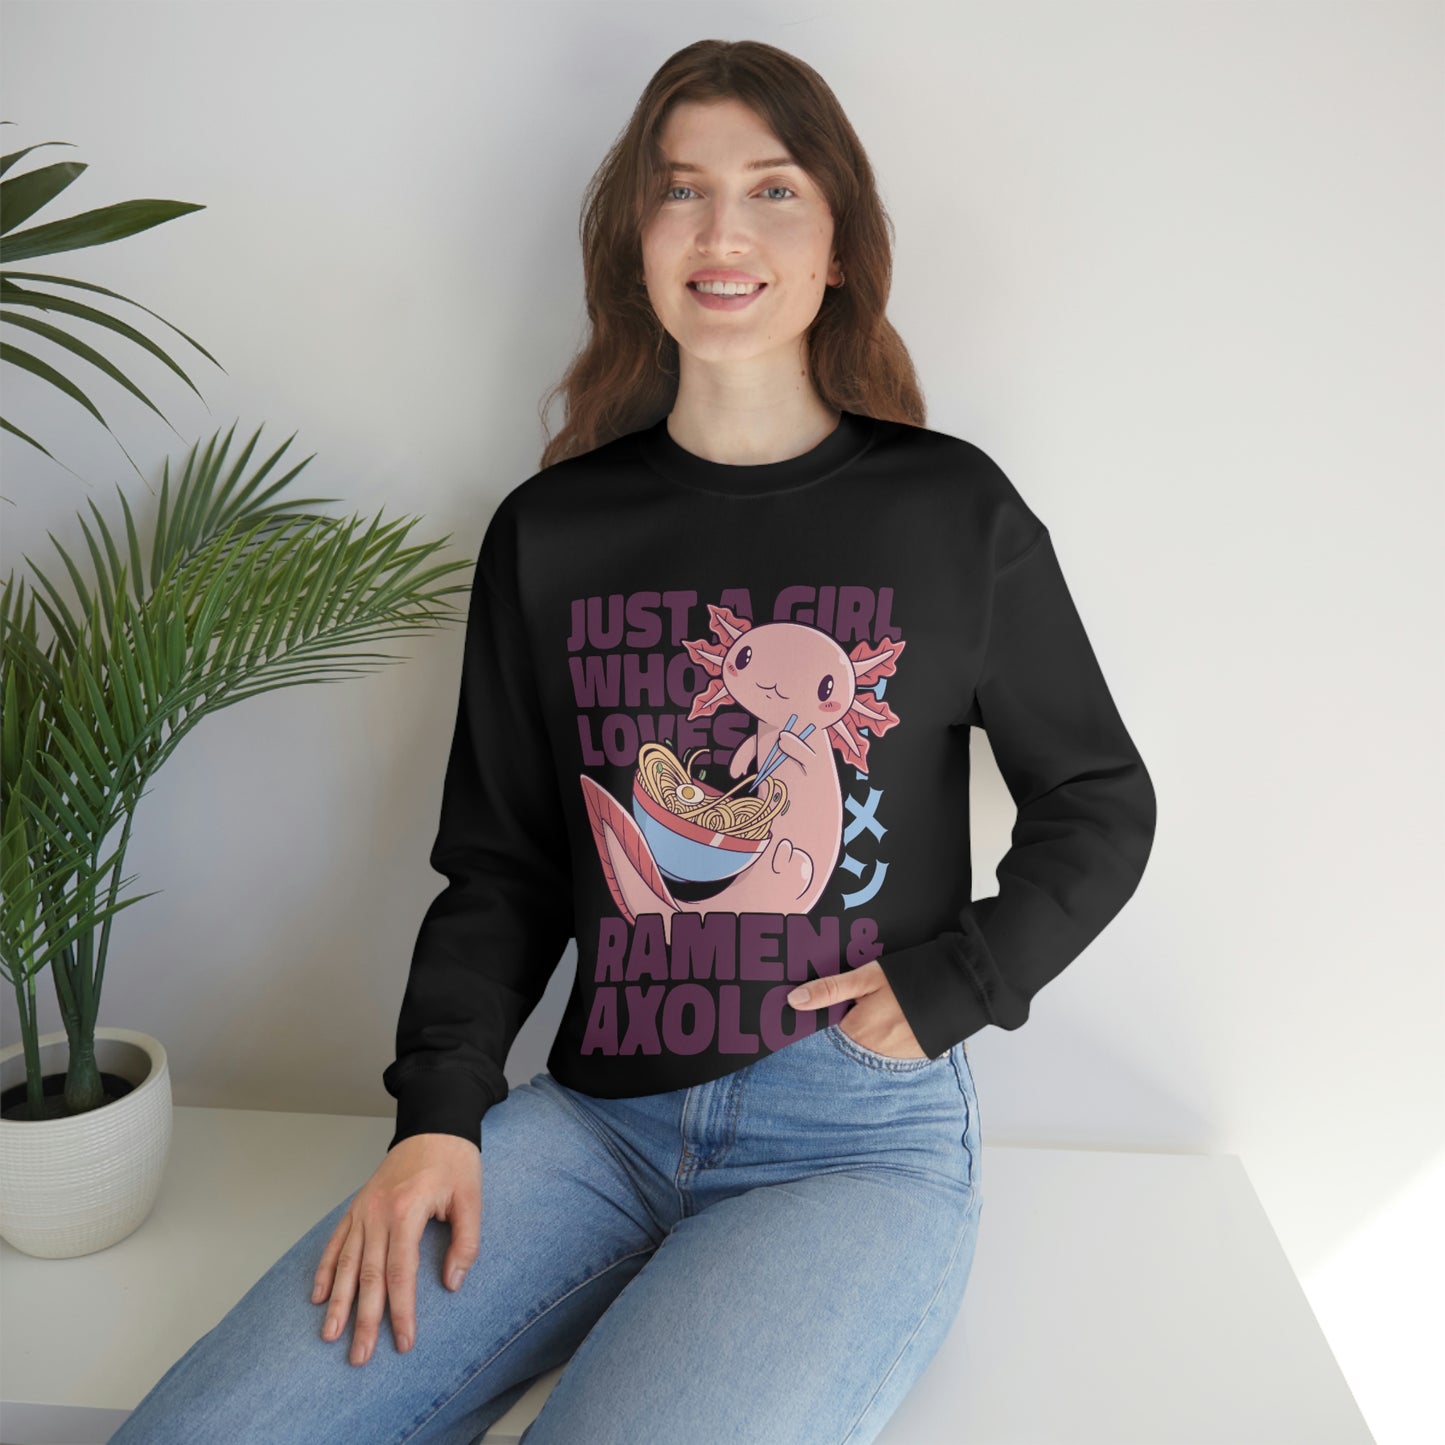 Kawaii Aesthetic Just A Girl Who Loves Ramen & Axolotl Sweatshirt